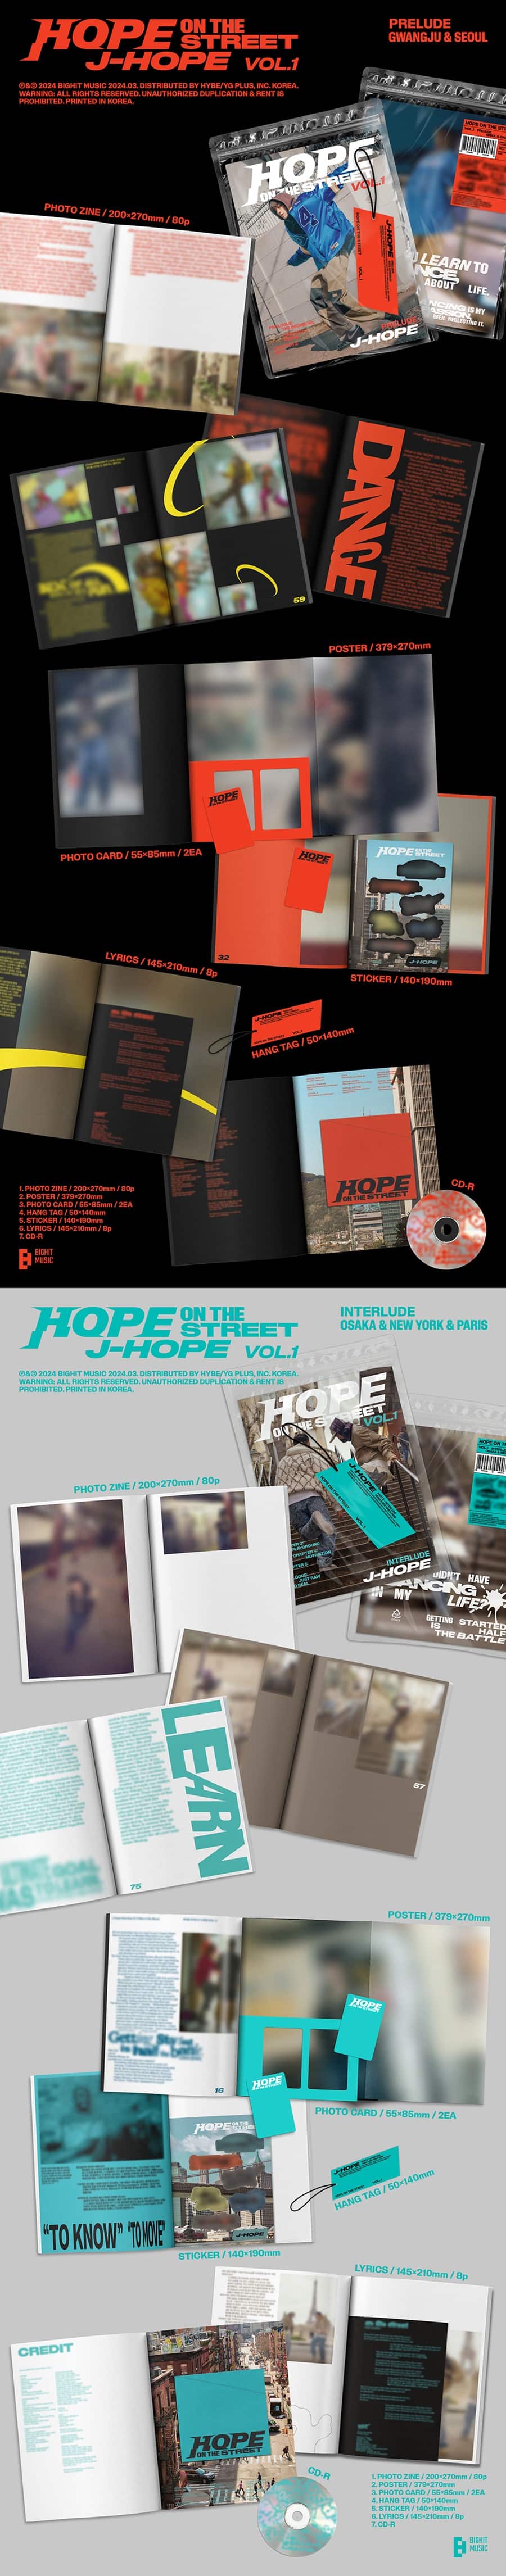 j-hope-hope-on-the-street-vol-1-wholesales